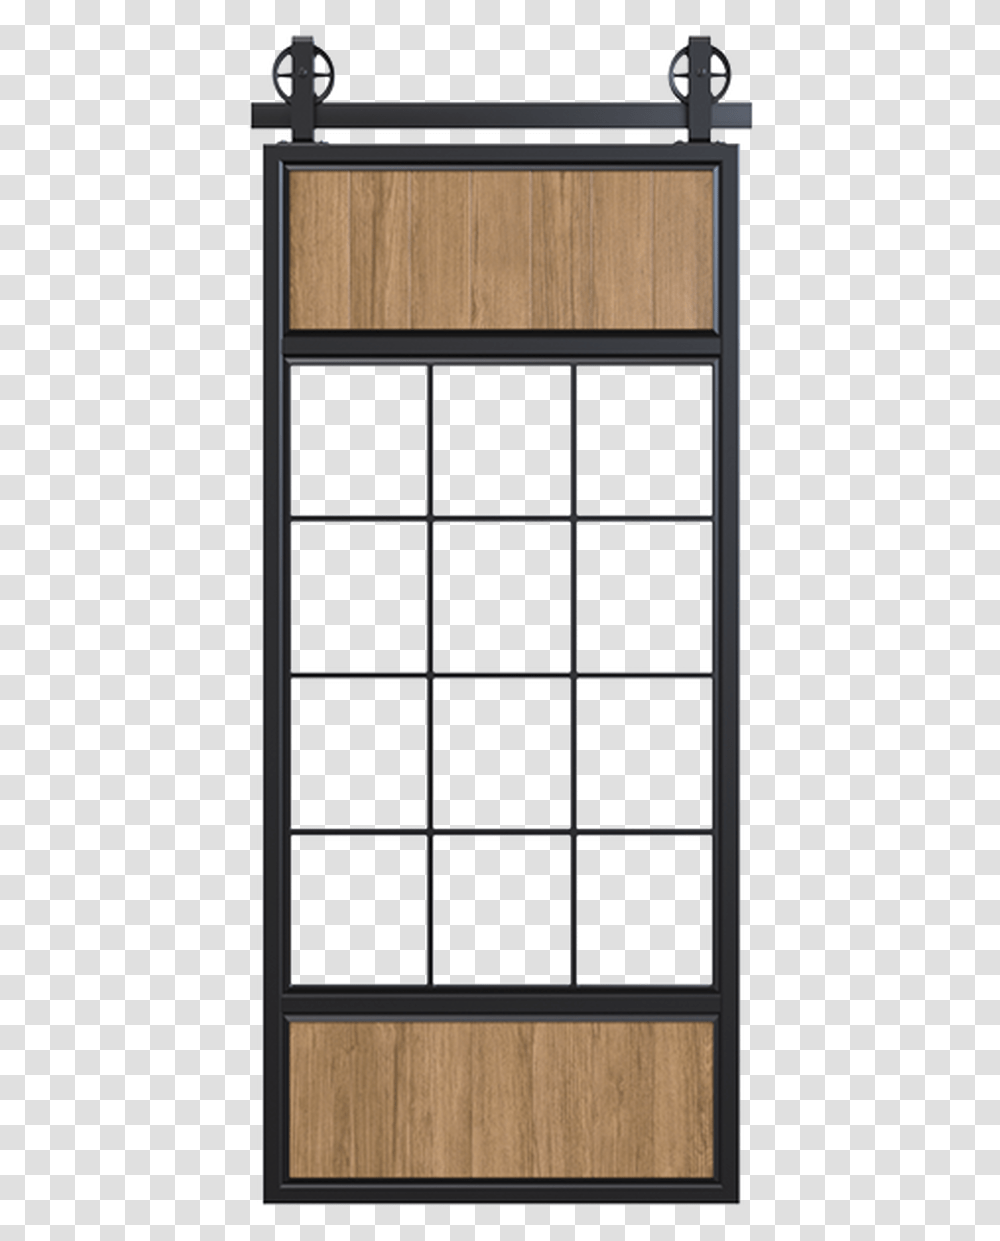 Metal Barn Door With Glass And Wood Panels Home Door, Window, Picture Window, Grille, Silhouette Transparent Png